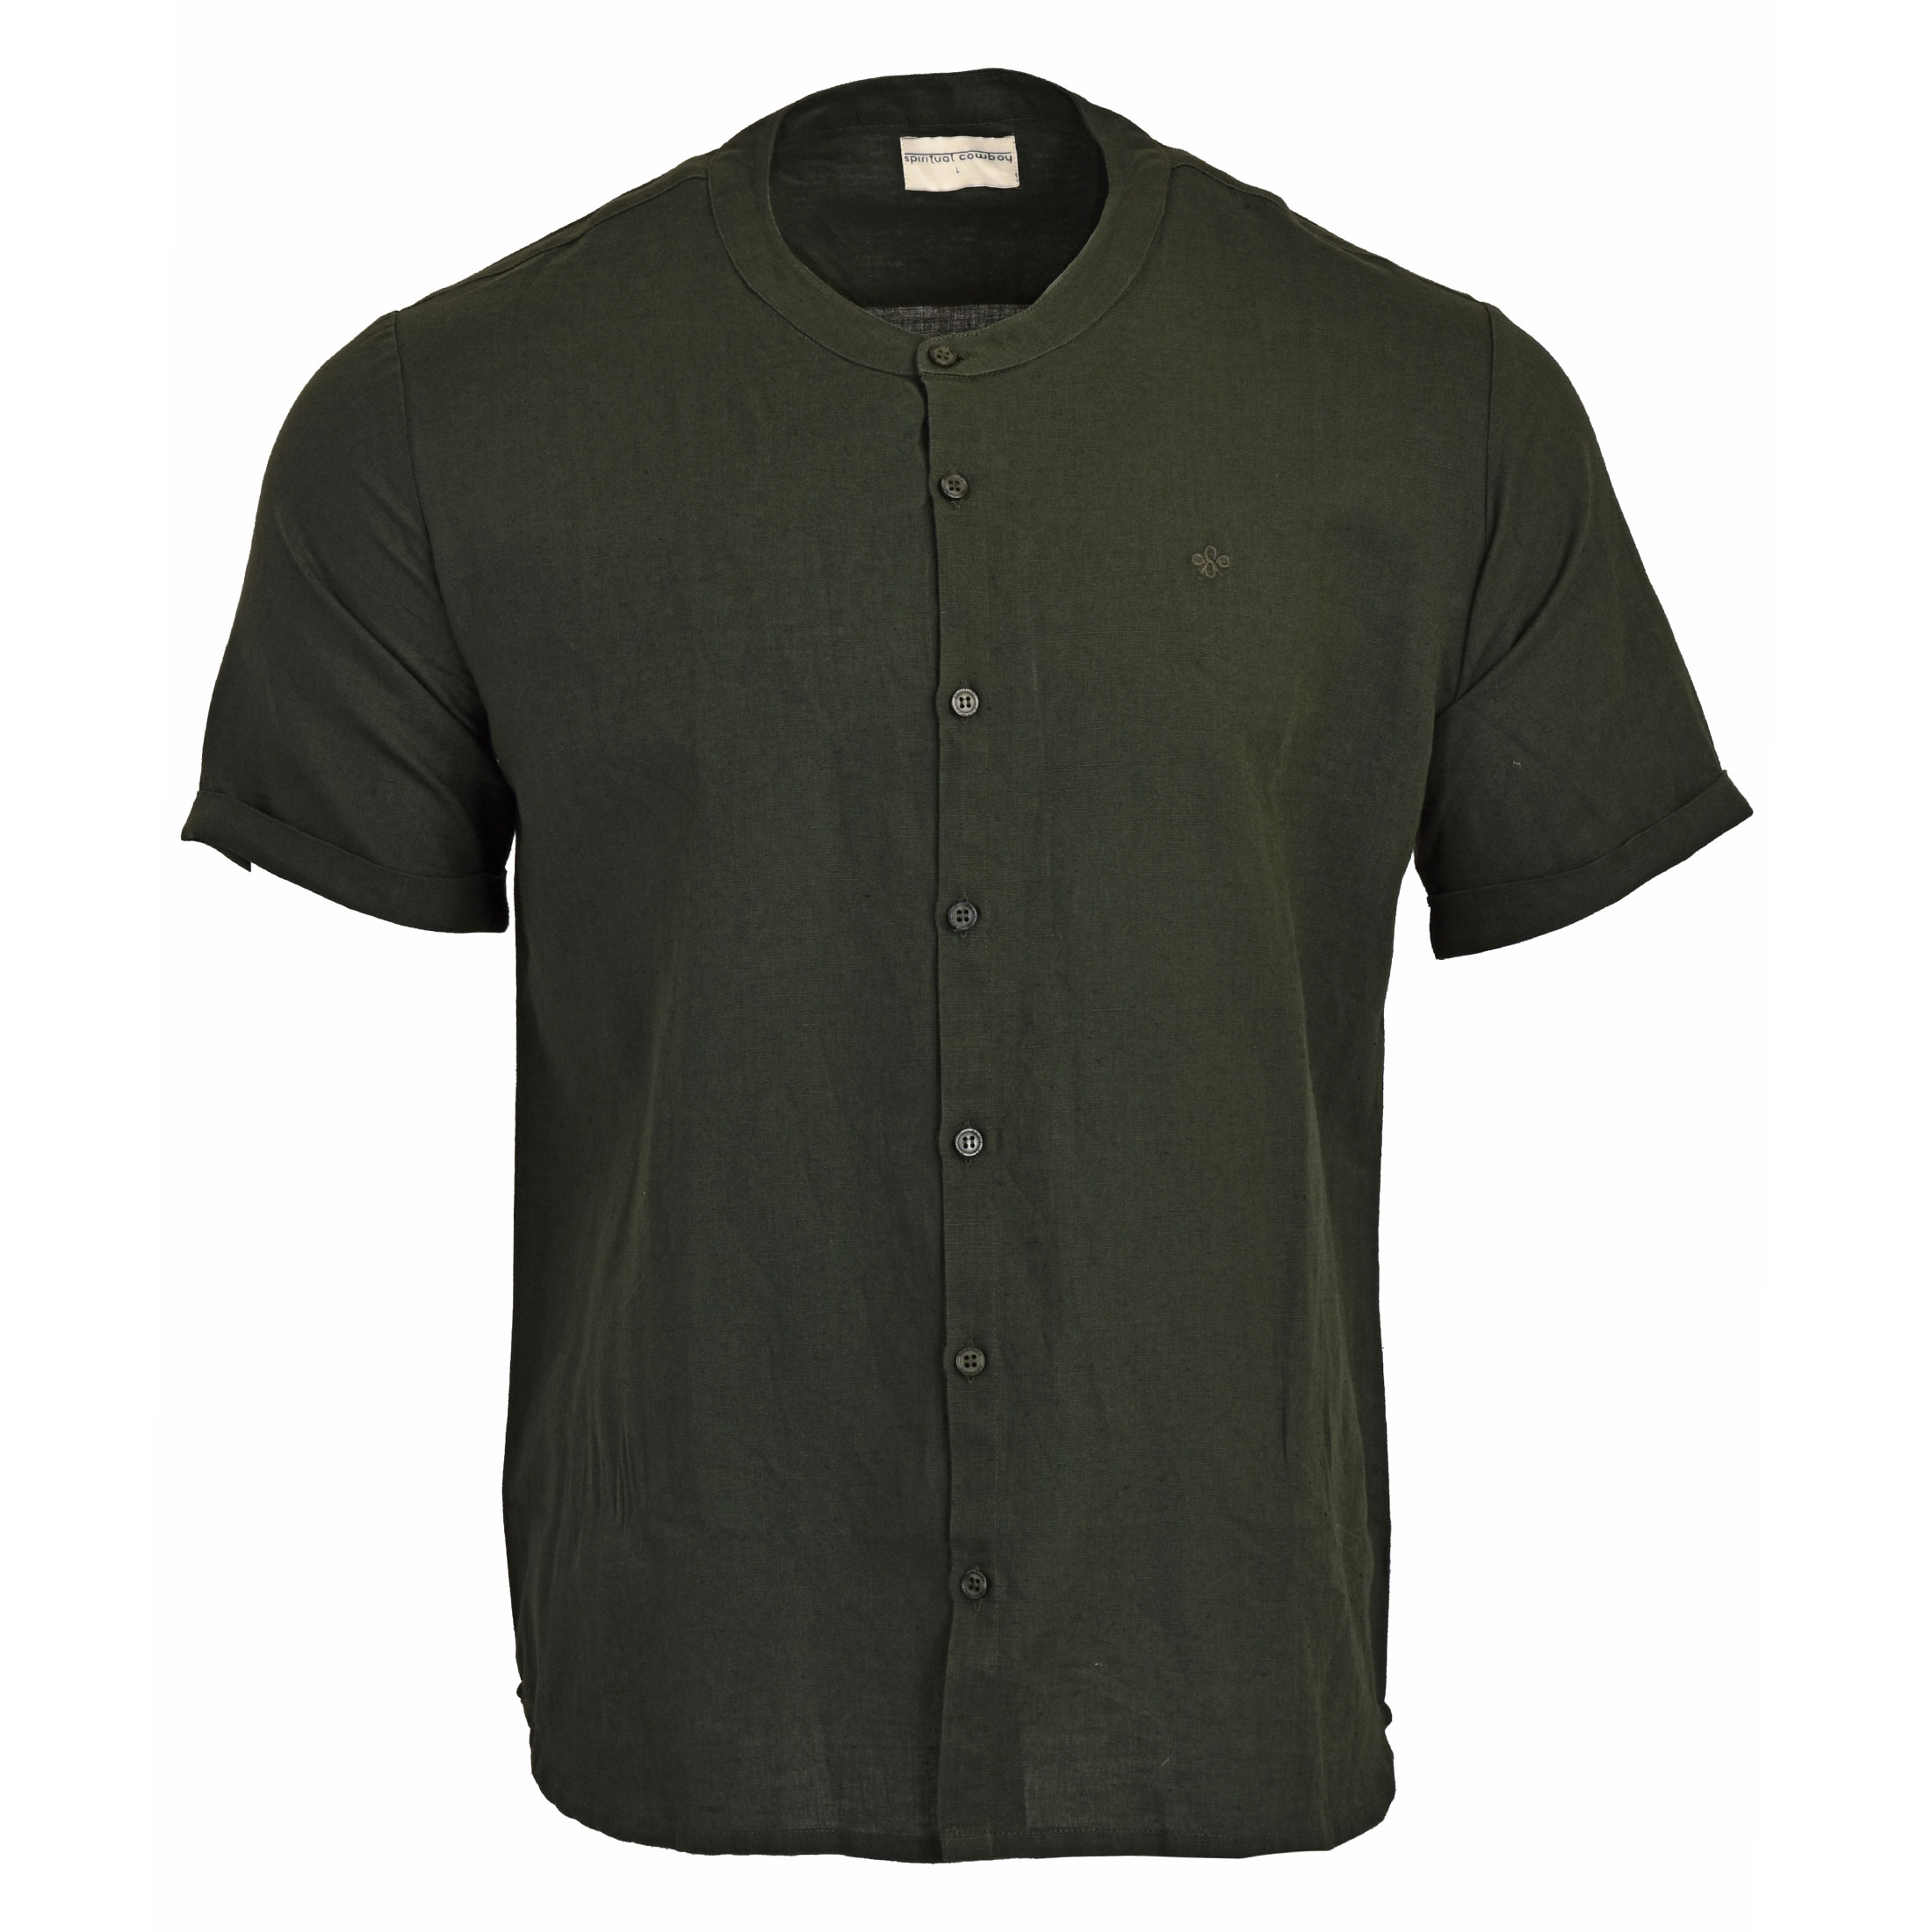 Madero Linen Shirt Short Sleeve Forest Green Front View